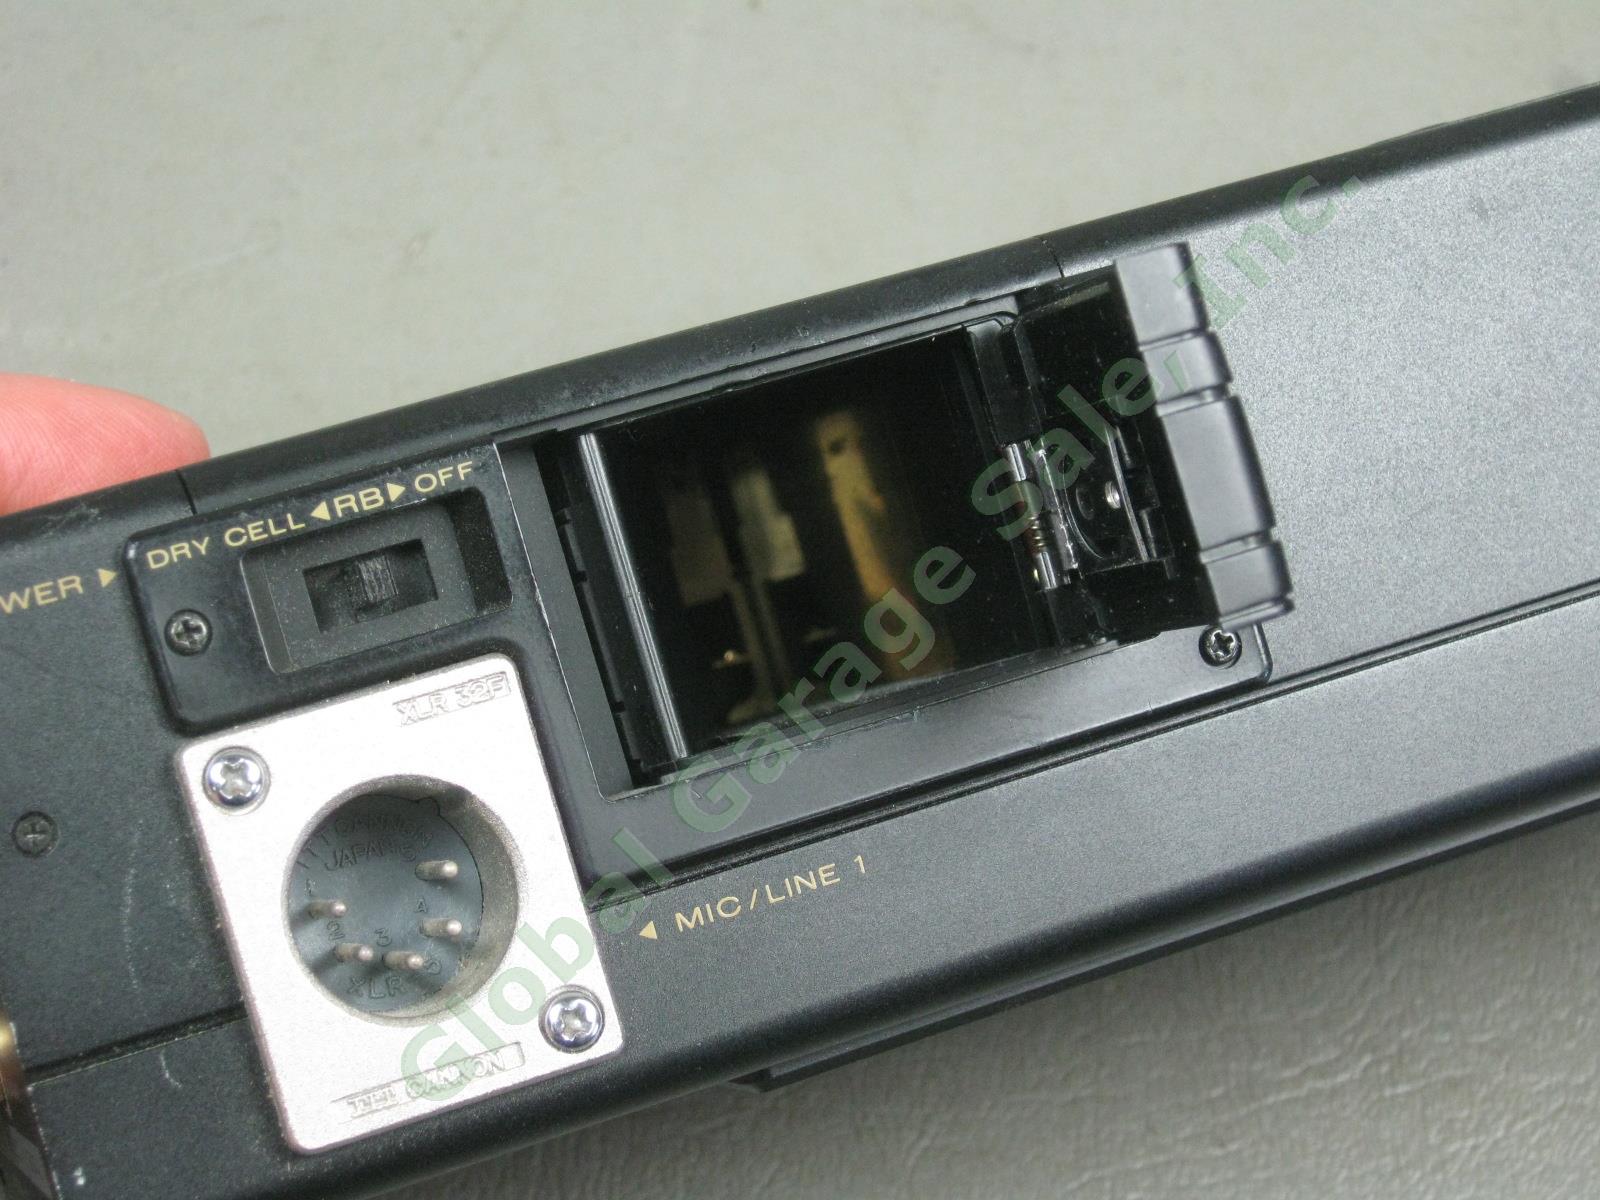 Marantz PMD700 Professional DAT Digital Audio Tape Deck Recorder +AC Adapter Lot 7